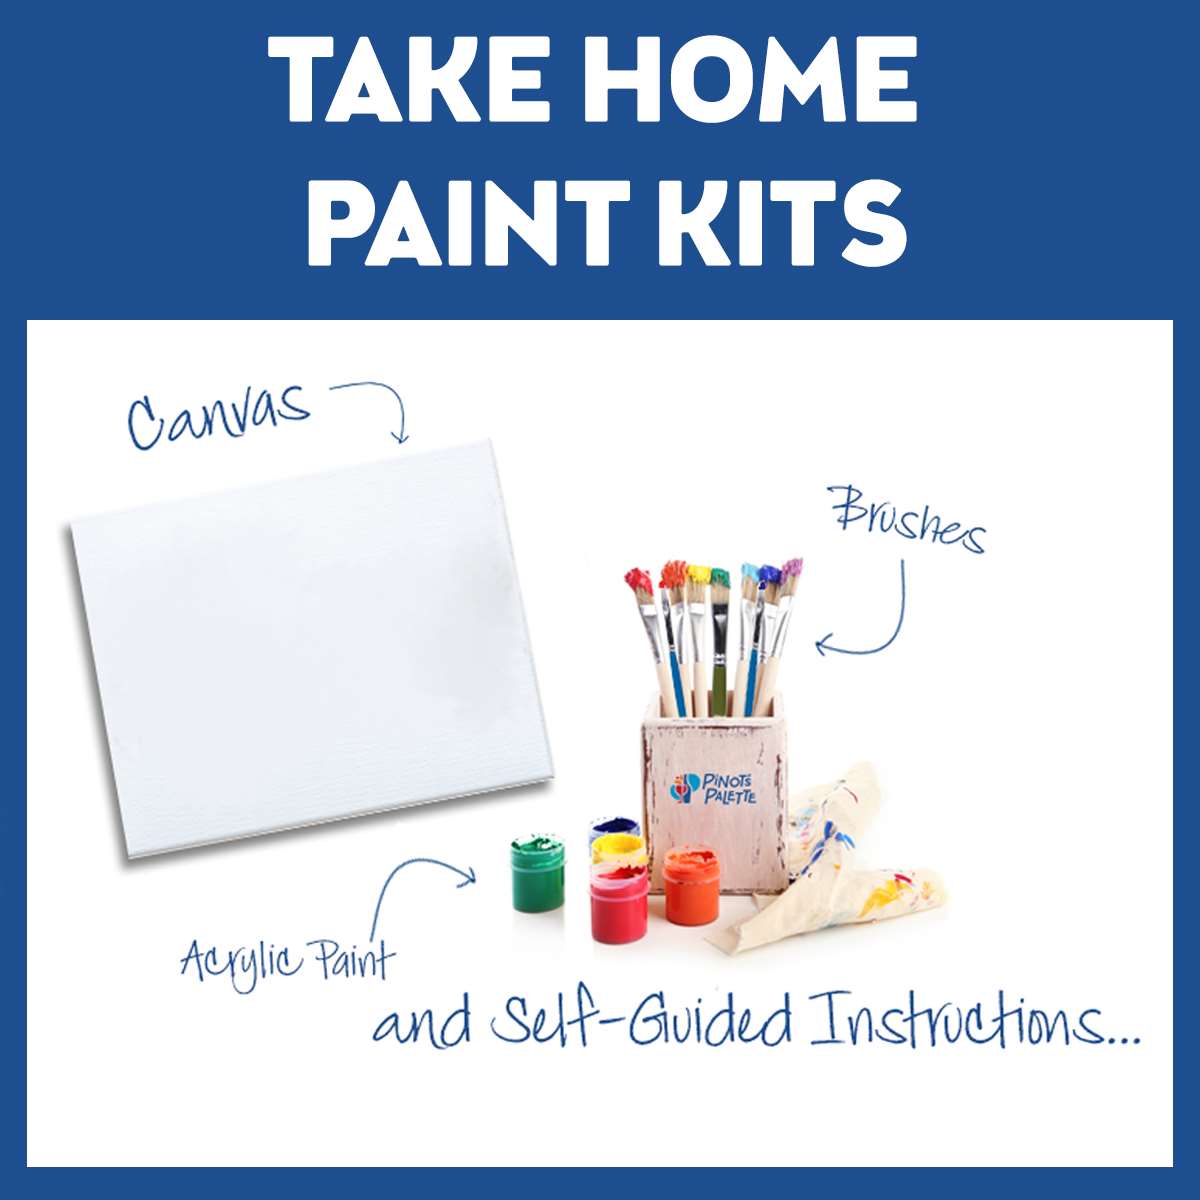 Take Home Paint Kits - Fri, Mar 27 2PM at Brick